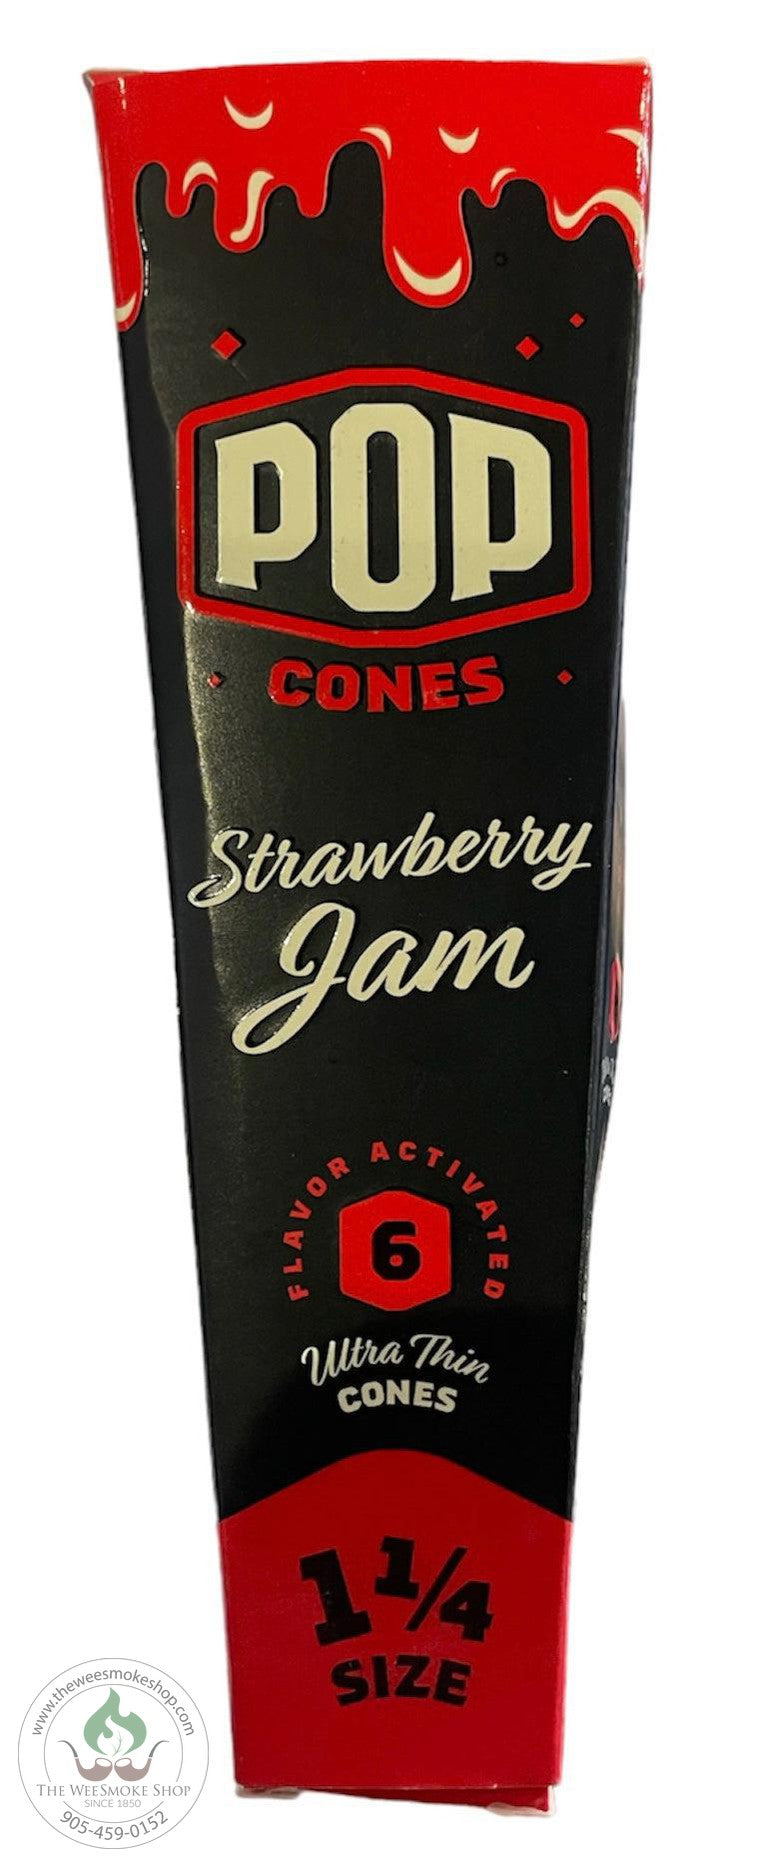 1 1/4 strawberry jam pop cones - The Wee Smoke Shop